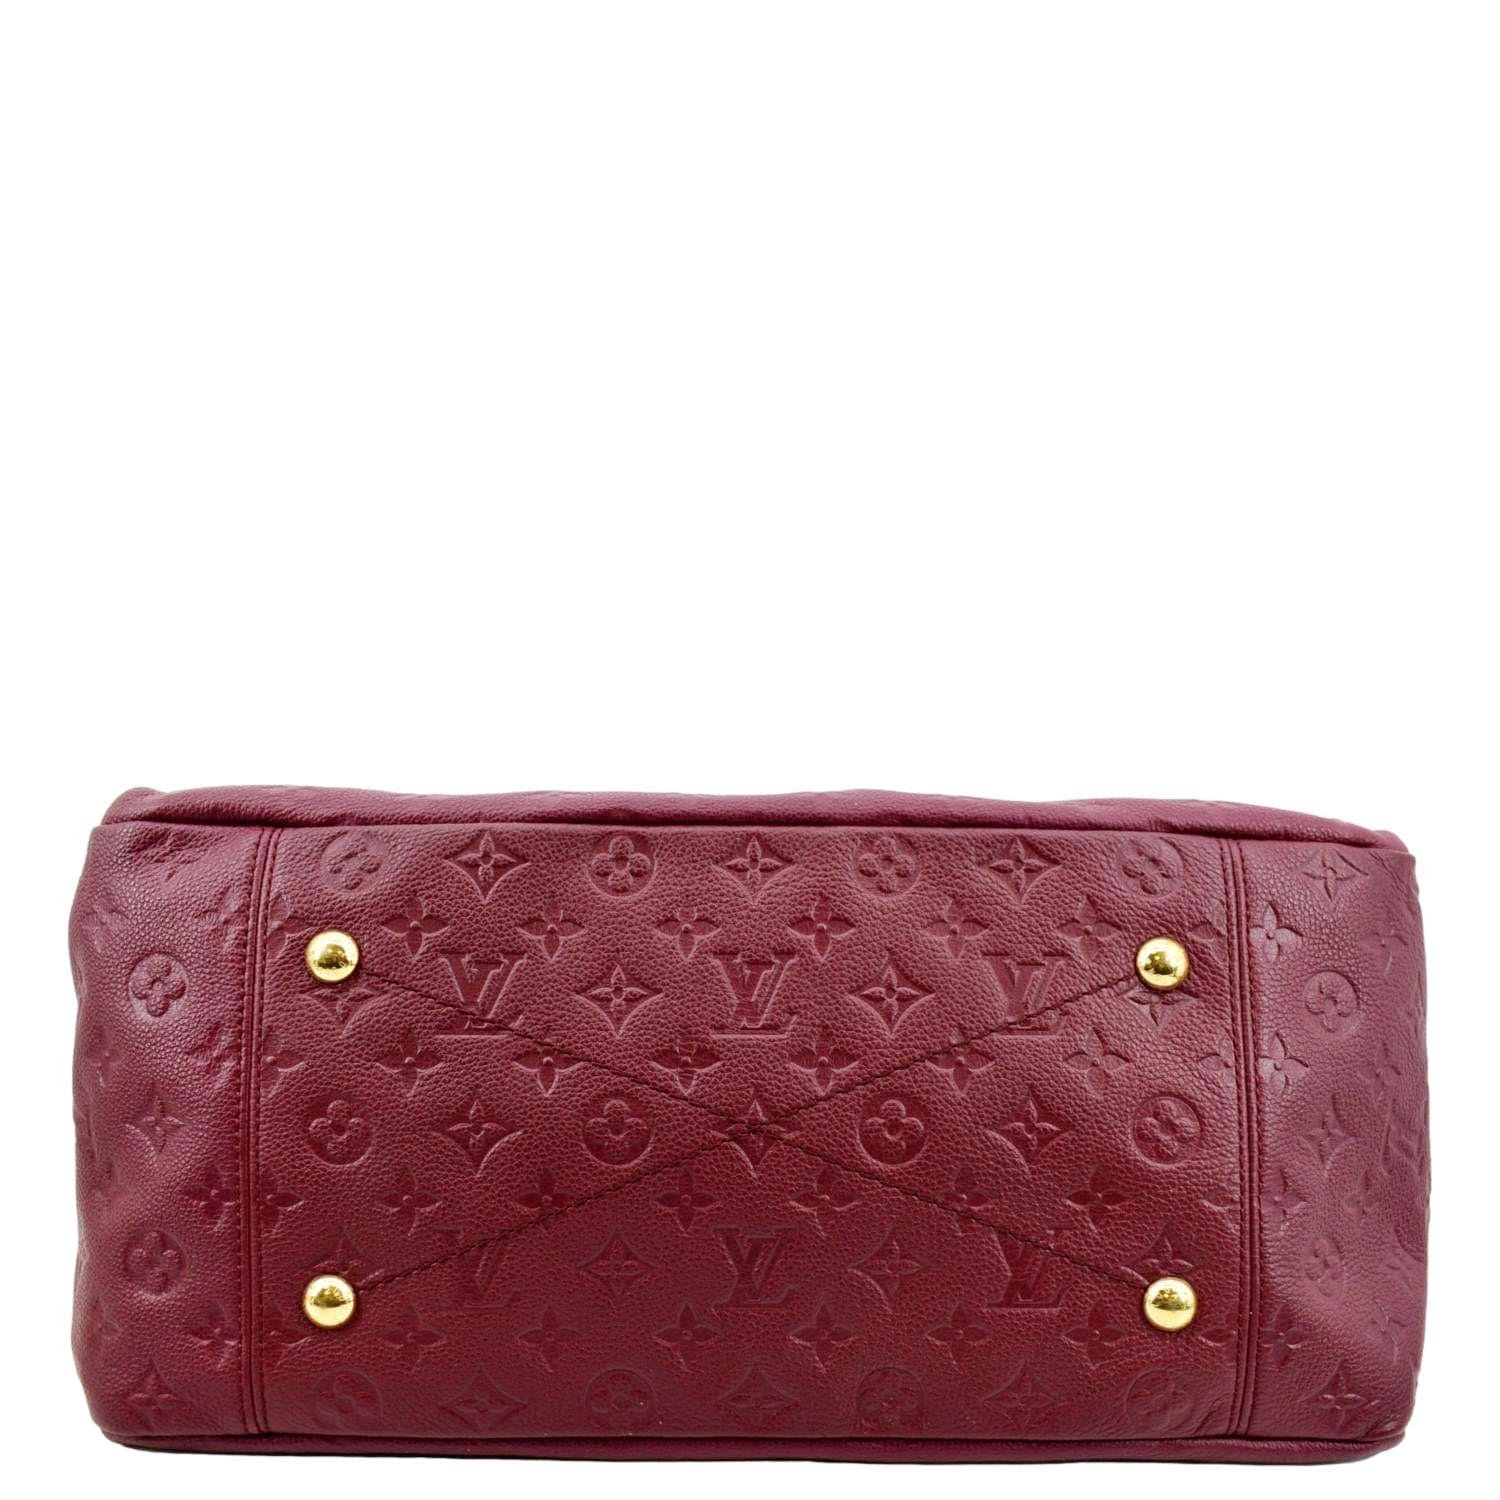 Authentic Louis Vuitton Pink Empreinte Leather Artsy mm Hobo Bag